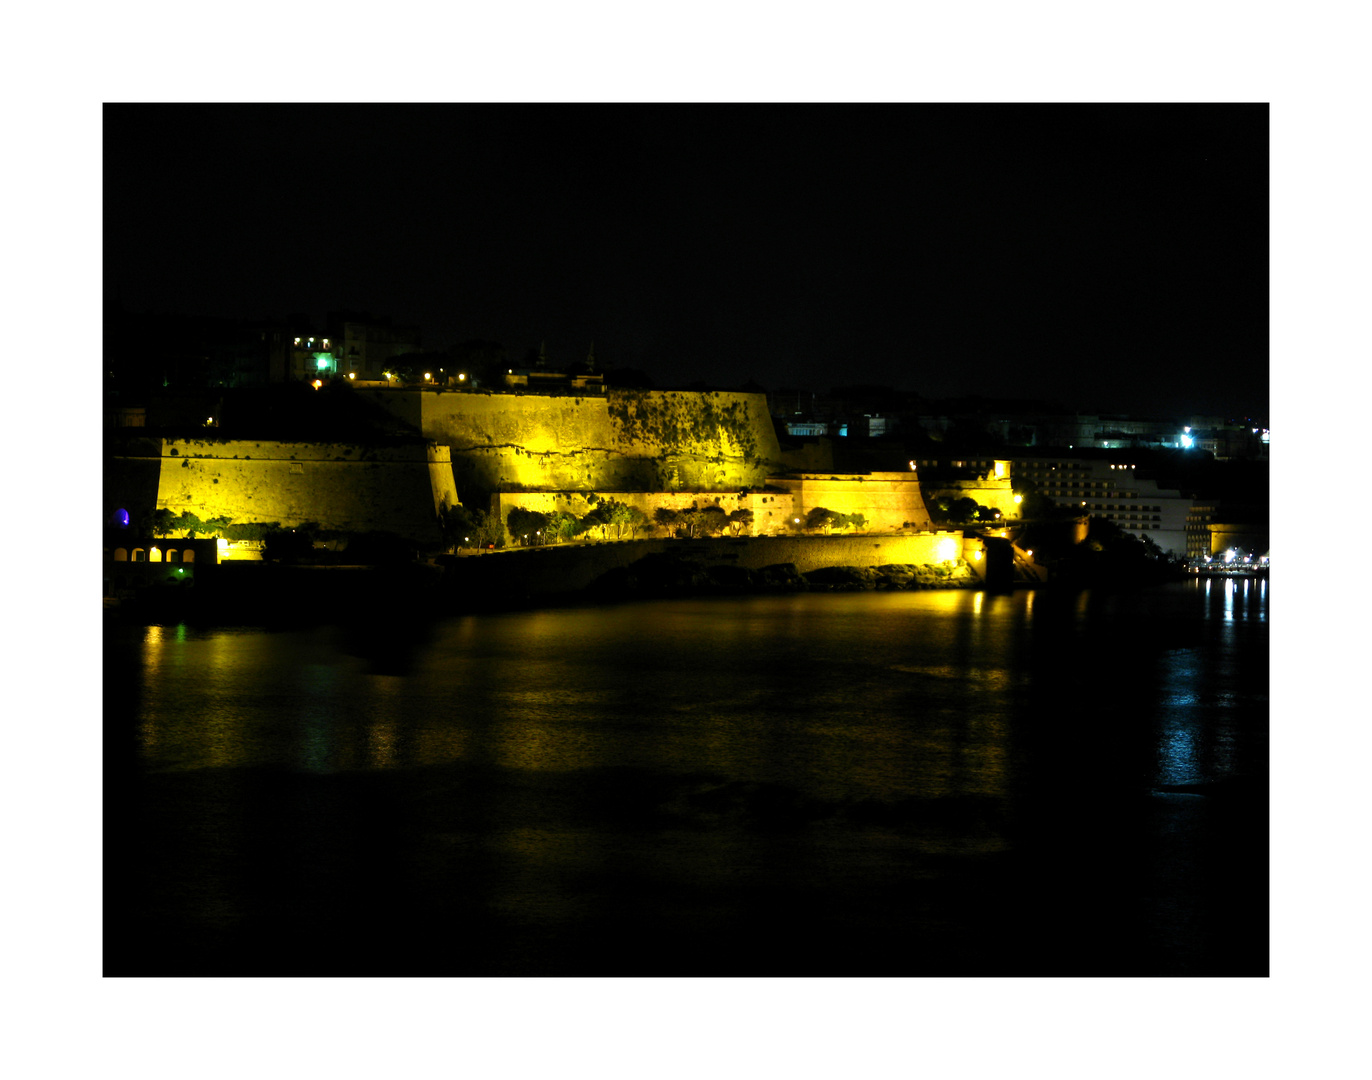 Fort St Elmo at night